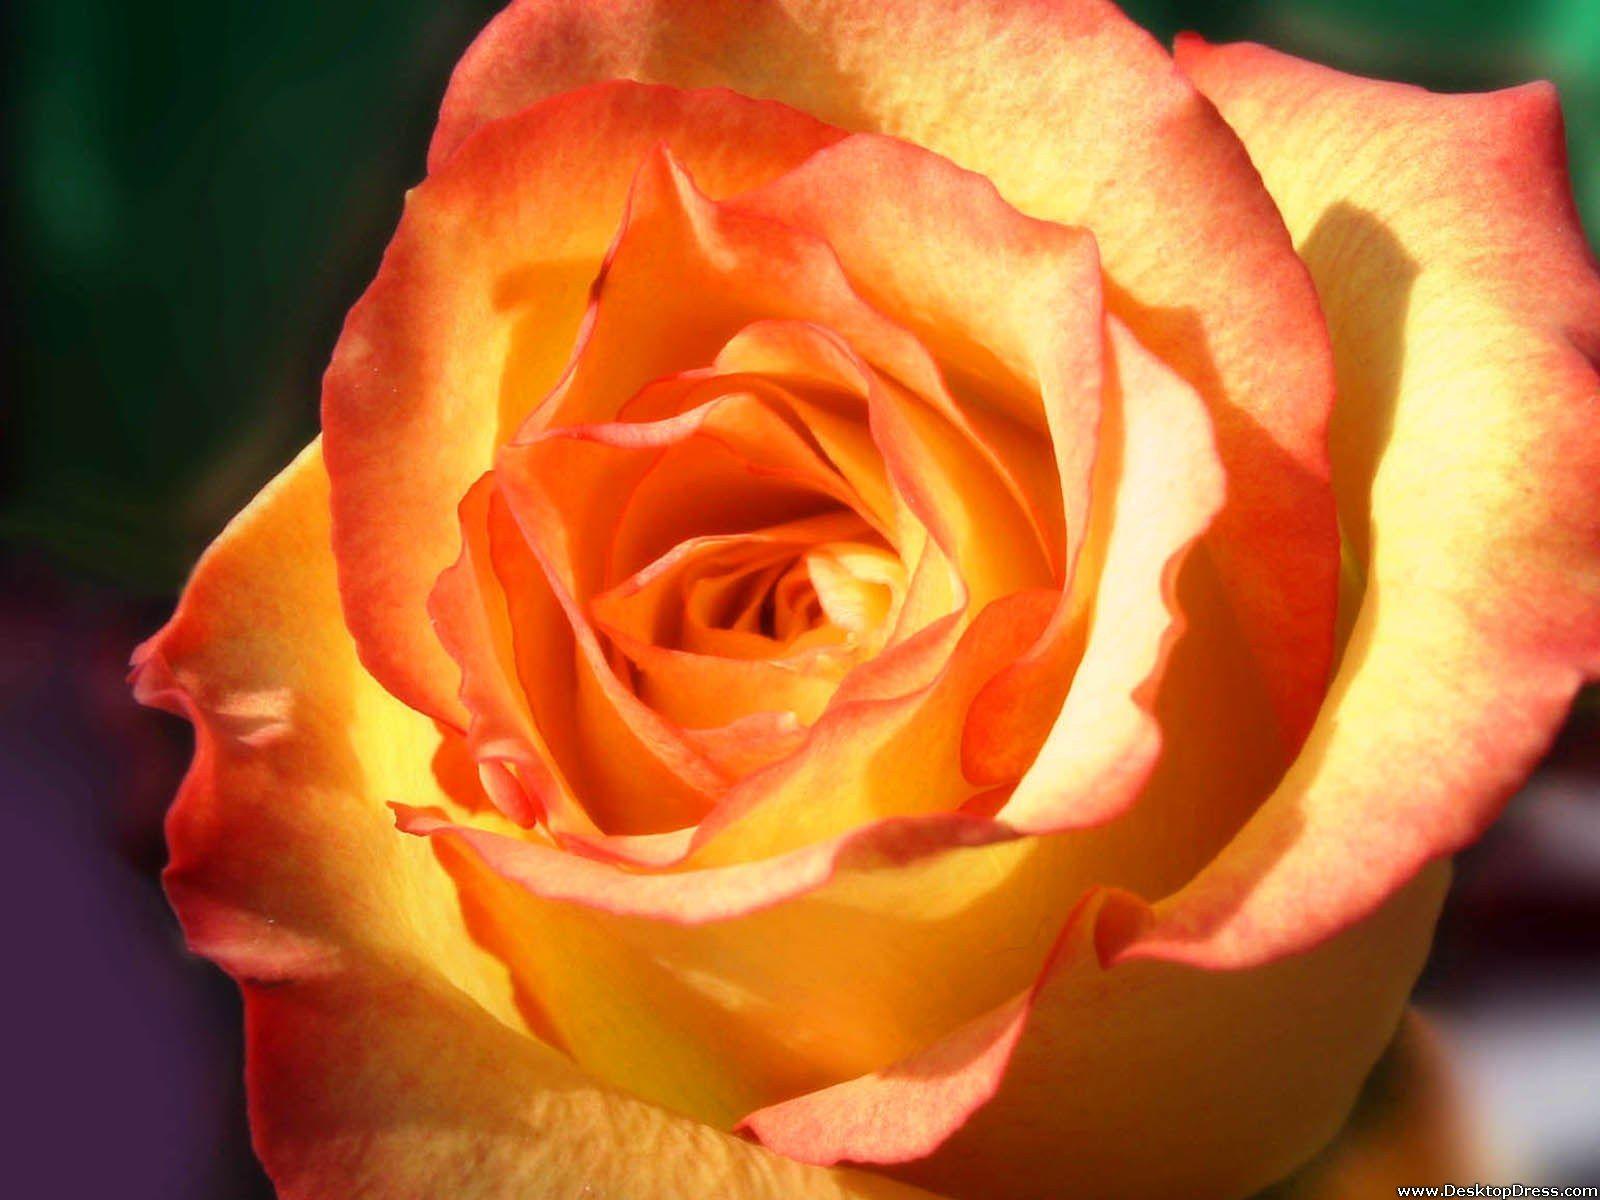 Orange Roses Desktop Wallpapers - Top Free Orange Roses Desktop ...